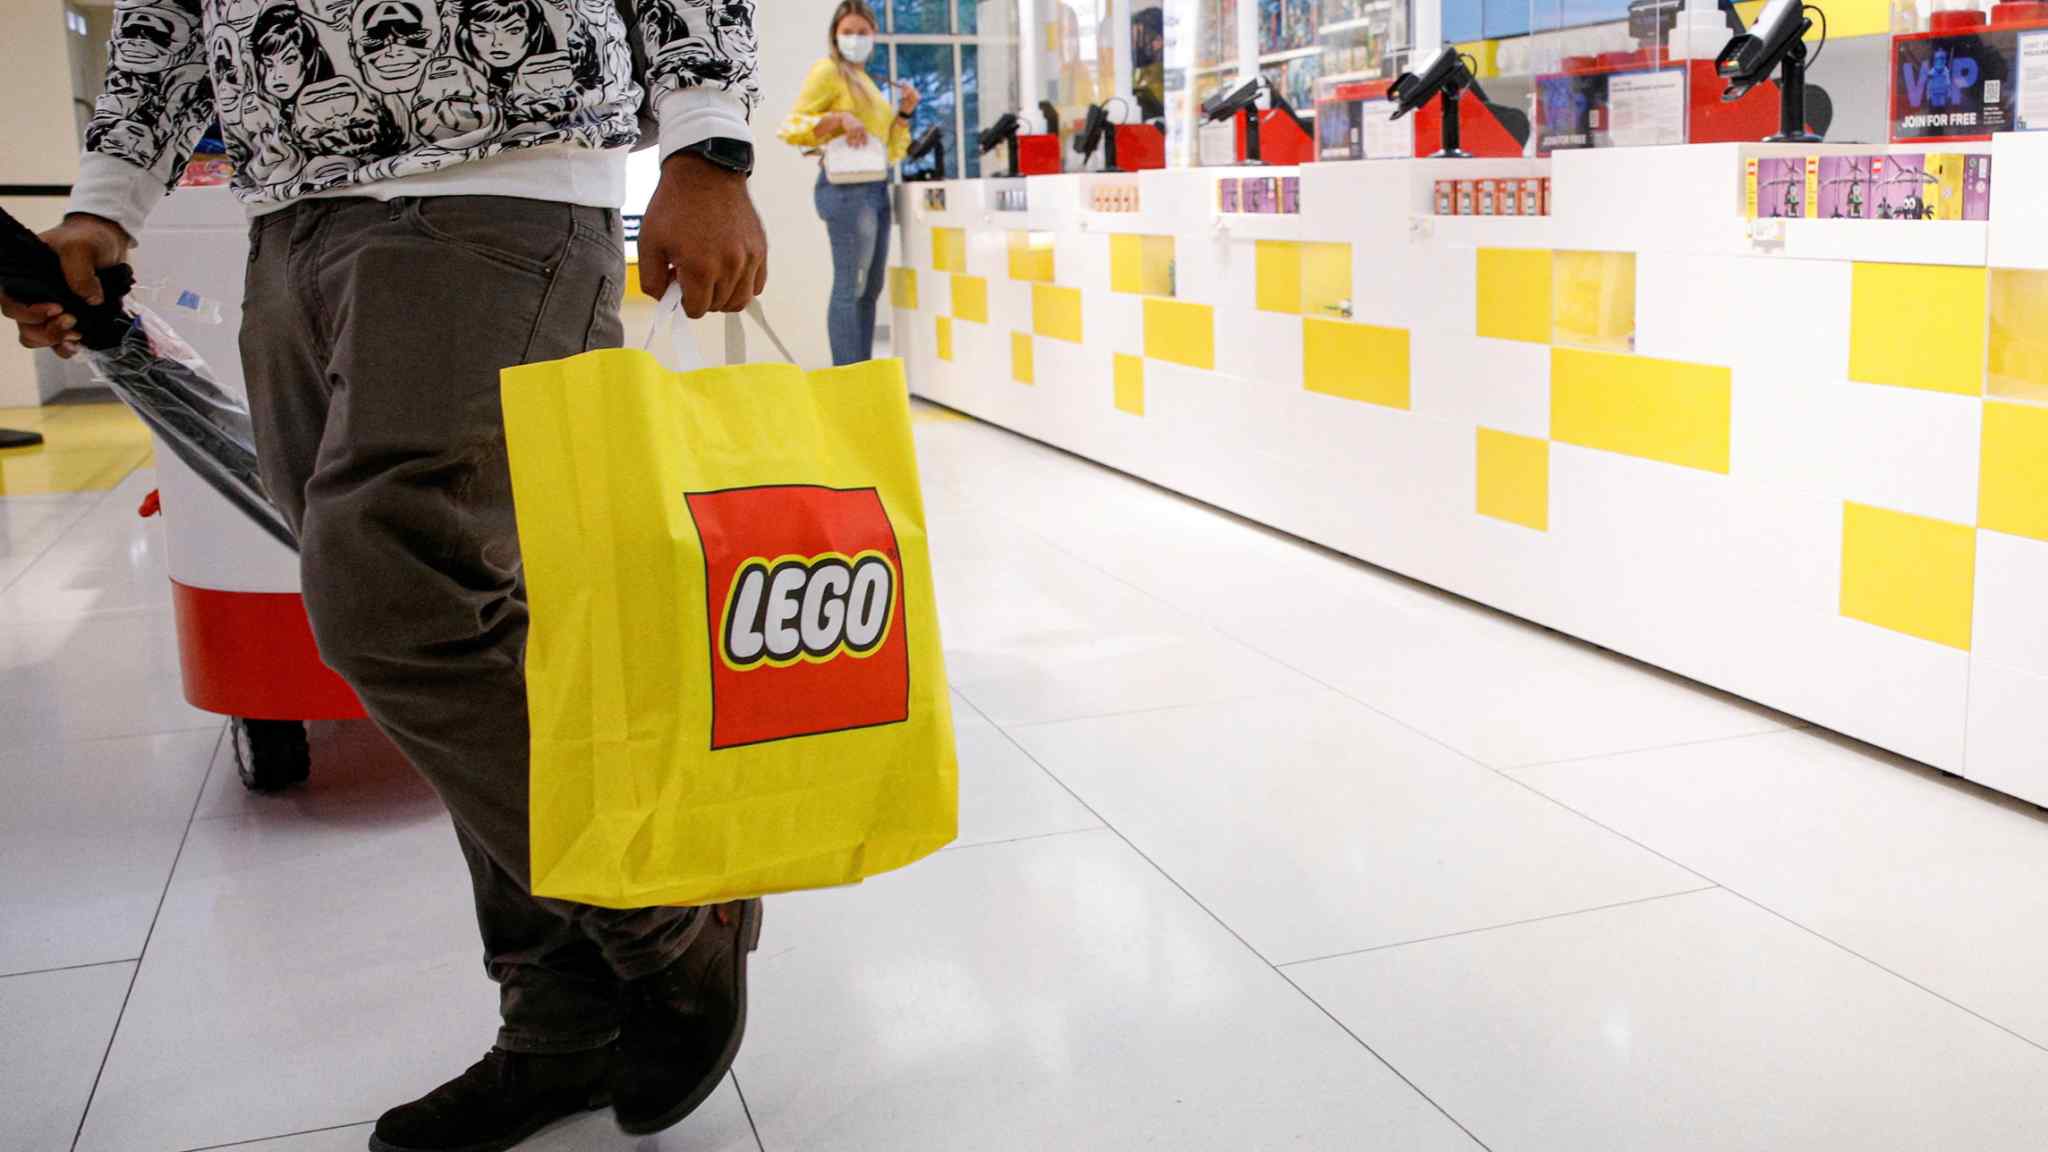 Lego expects to take market share amid economic slowdown